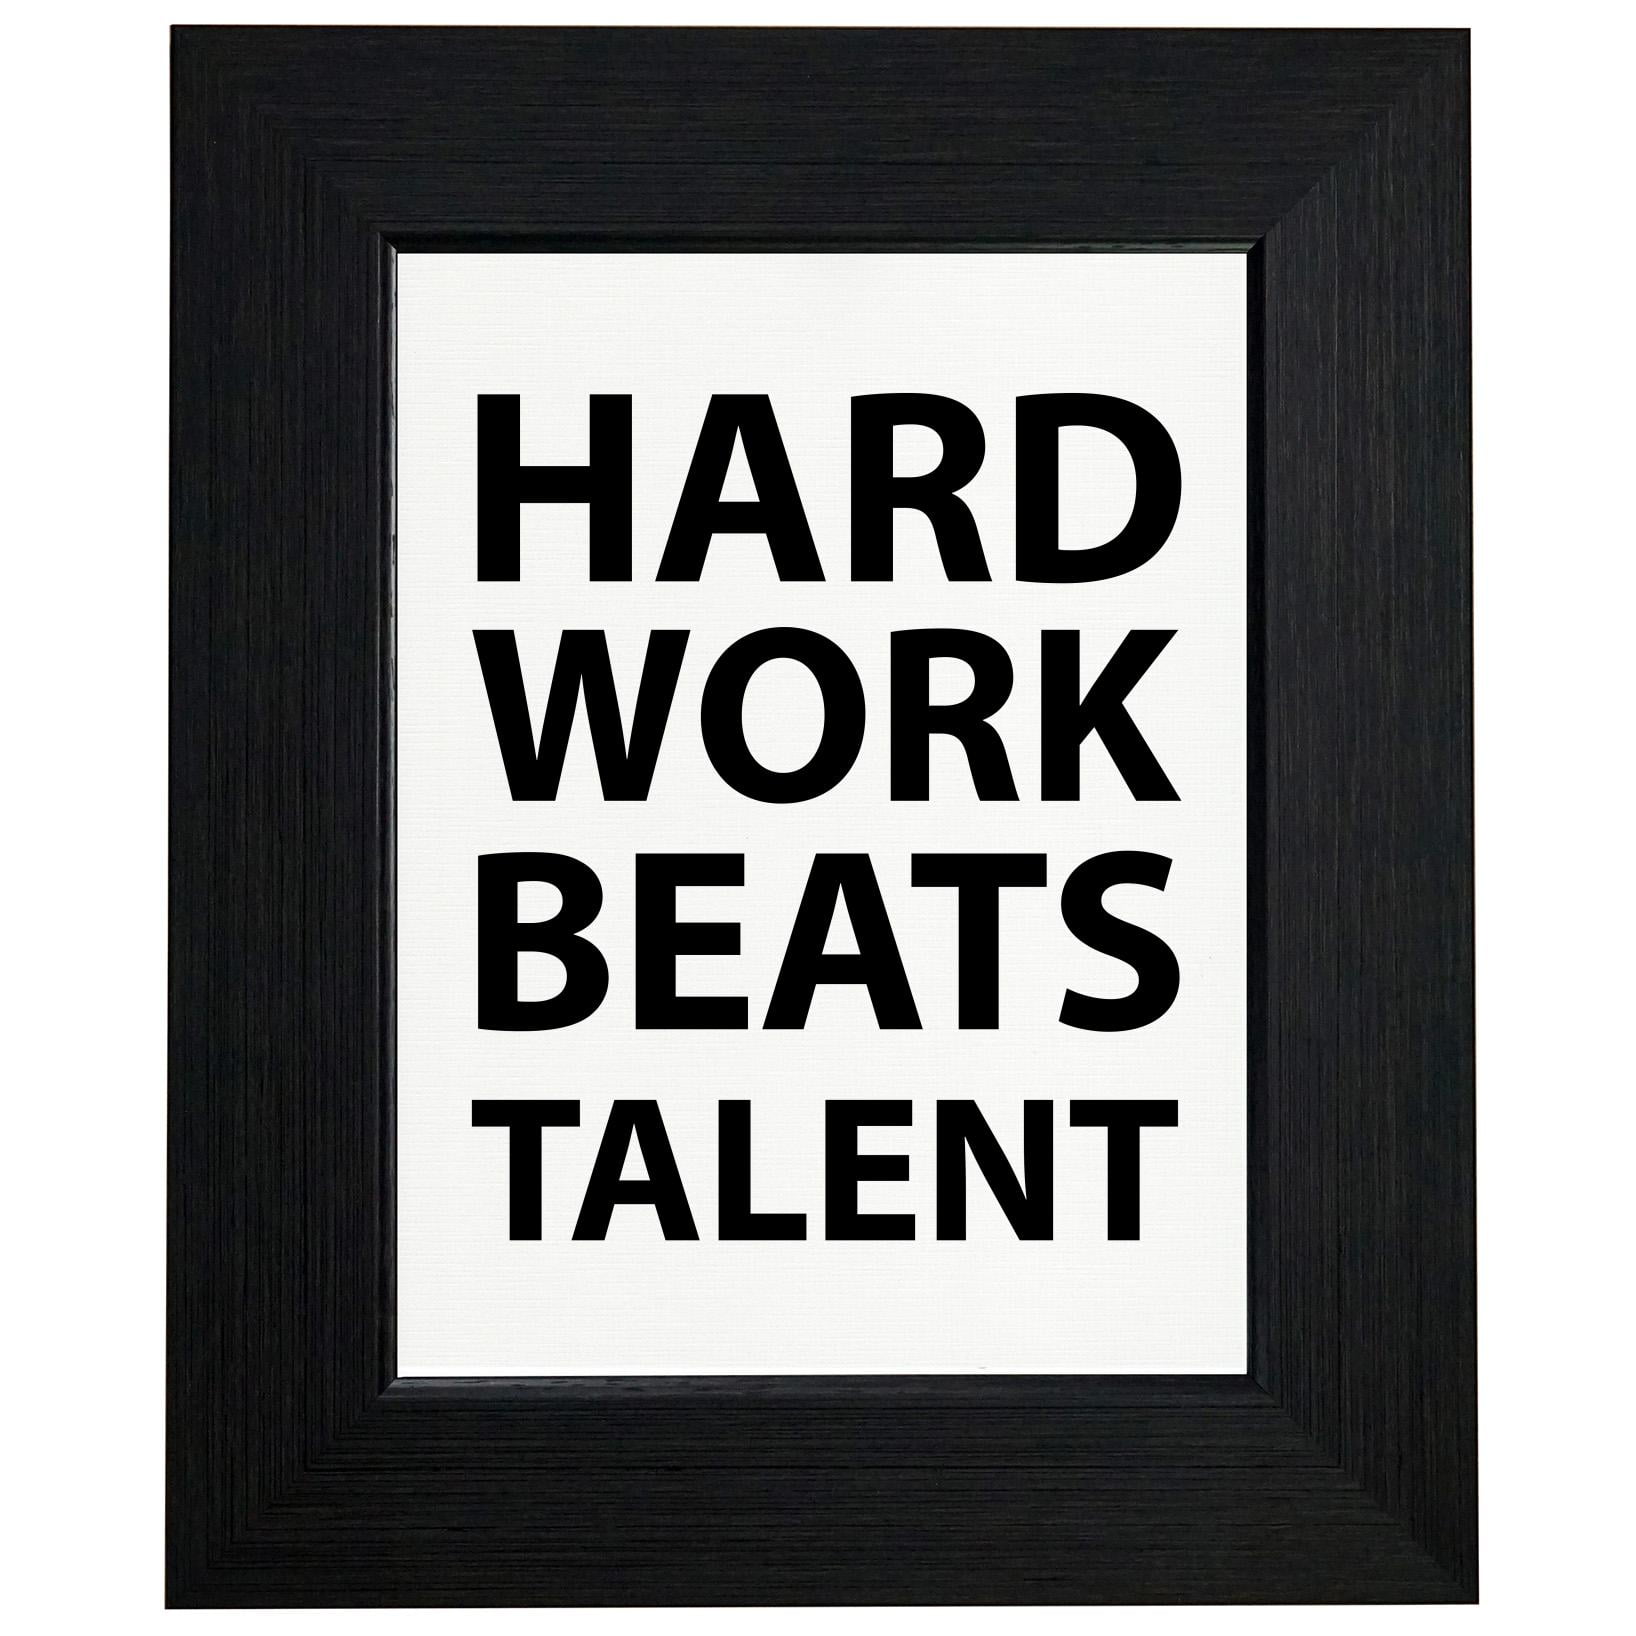 Work a poster. Work hard плакат. Work harder обои на телефон. Hard work Beats Talent but Talent which work. Hard work only Beats Talent when Talent doesn’t work hard lad.